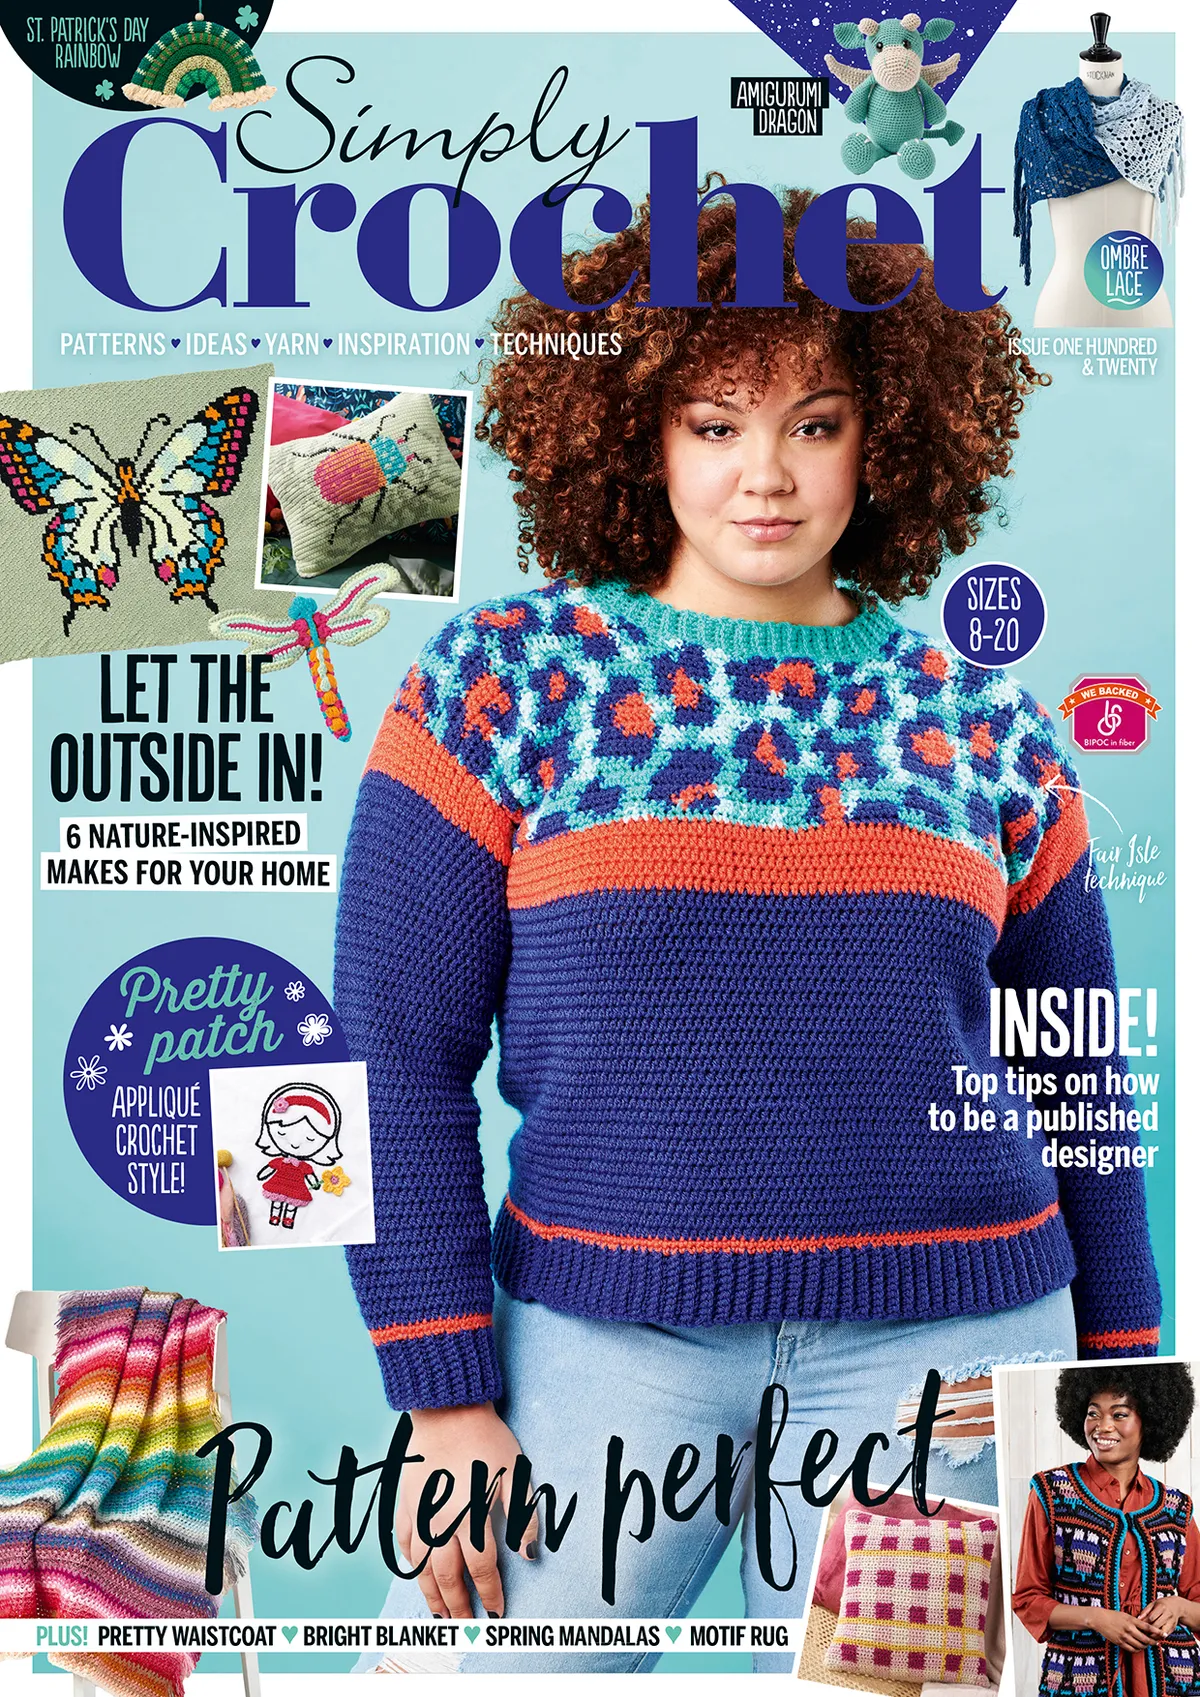 Simply Crochet issue 120 digi